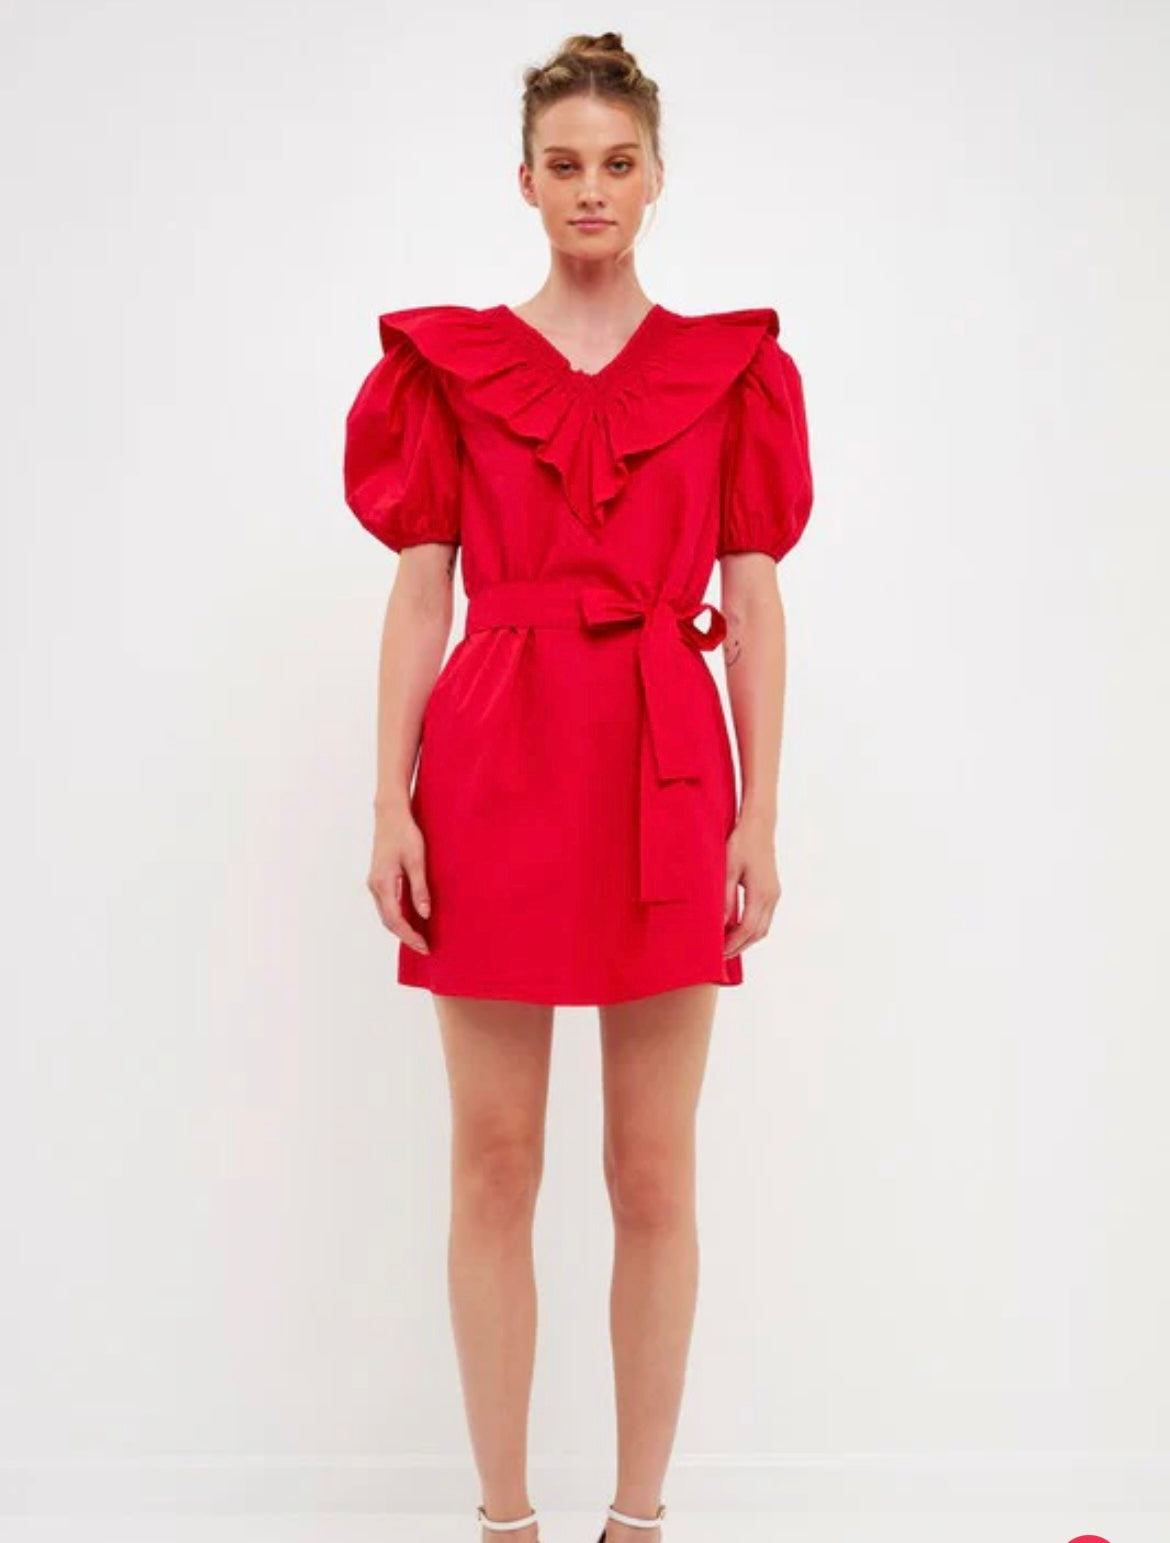 Ruffled Red Mini Dress